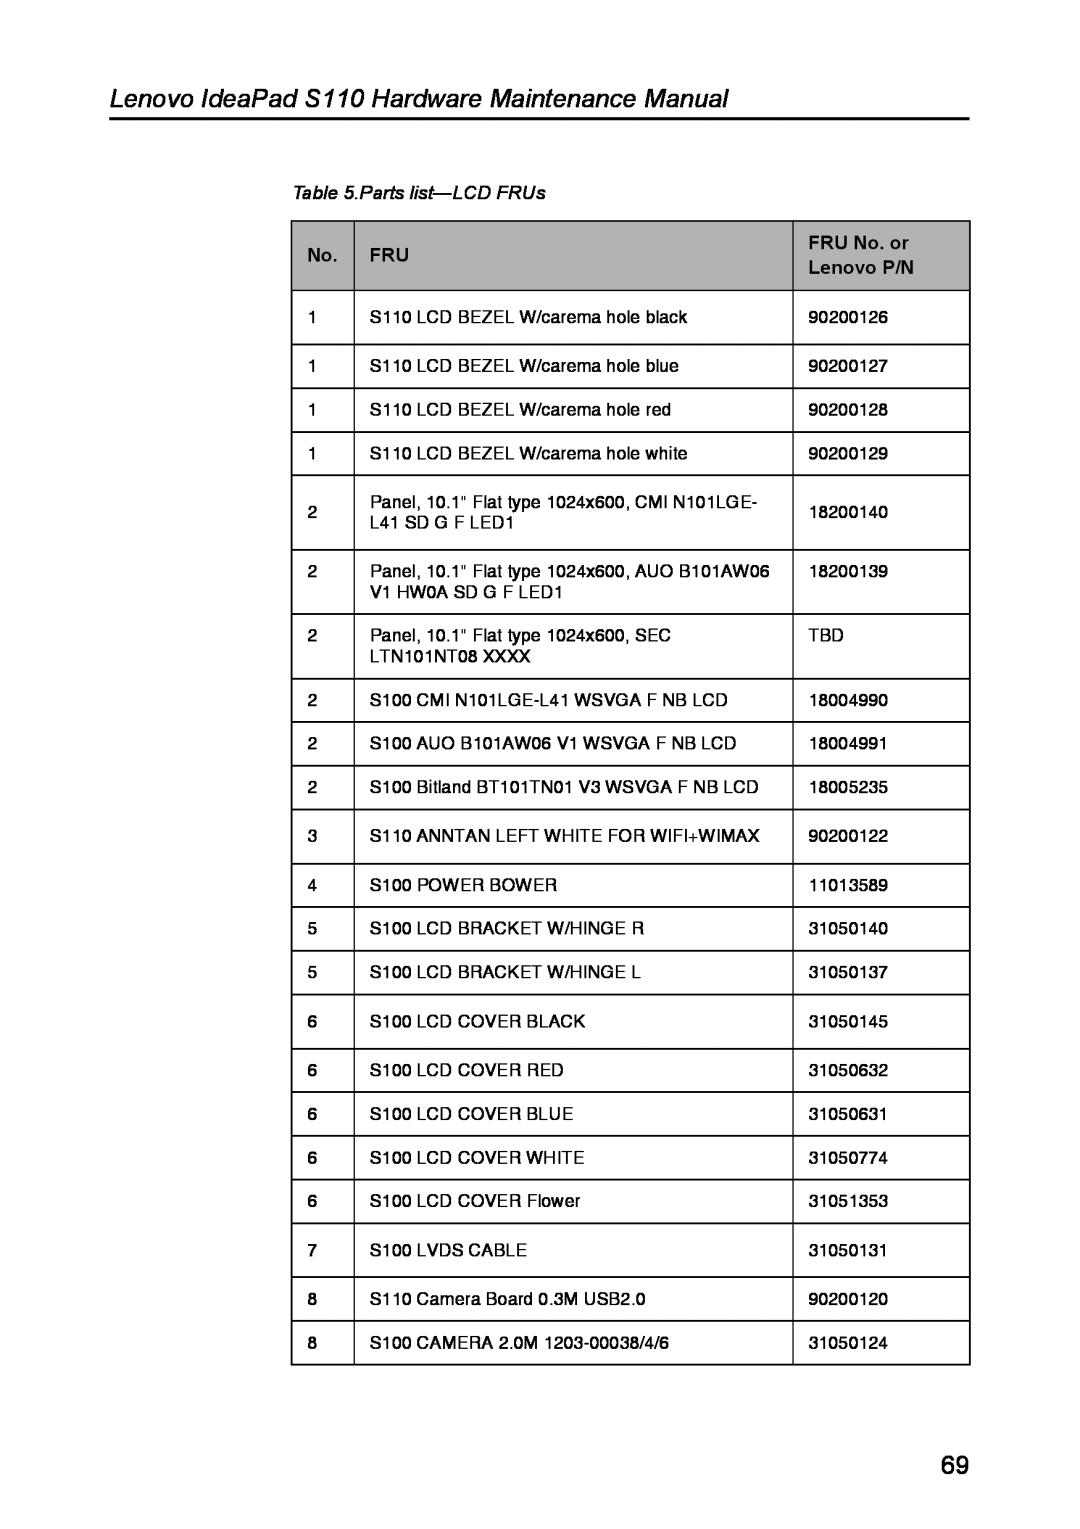 Lenovo manual Parts list-LCD FRUs, Lenovo IdeaPad S110 Hardware Maintenance Manual, FRU No. or, Lenovo P/N 